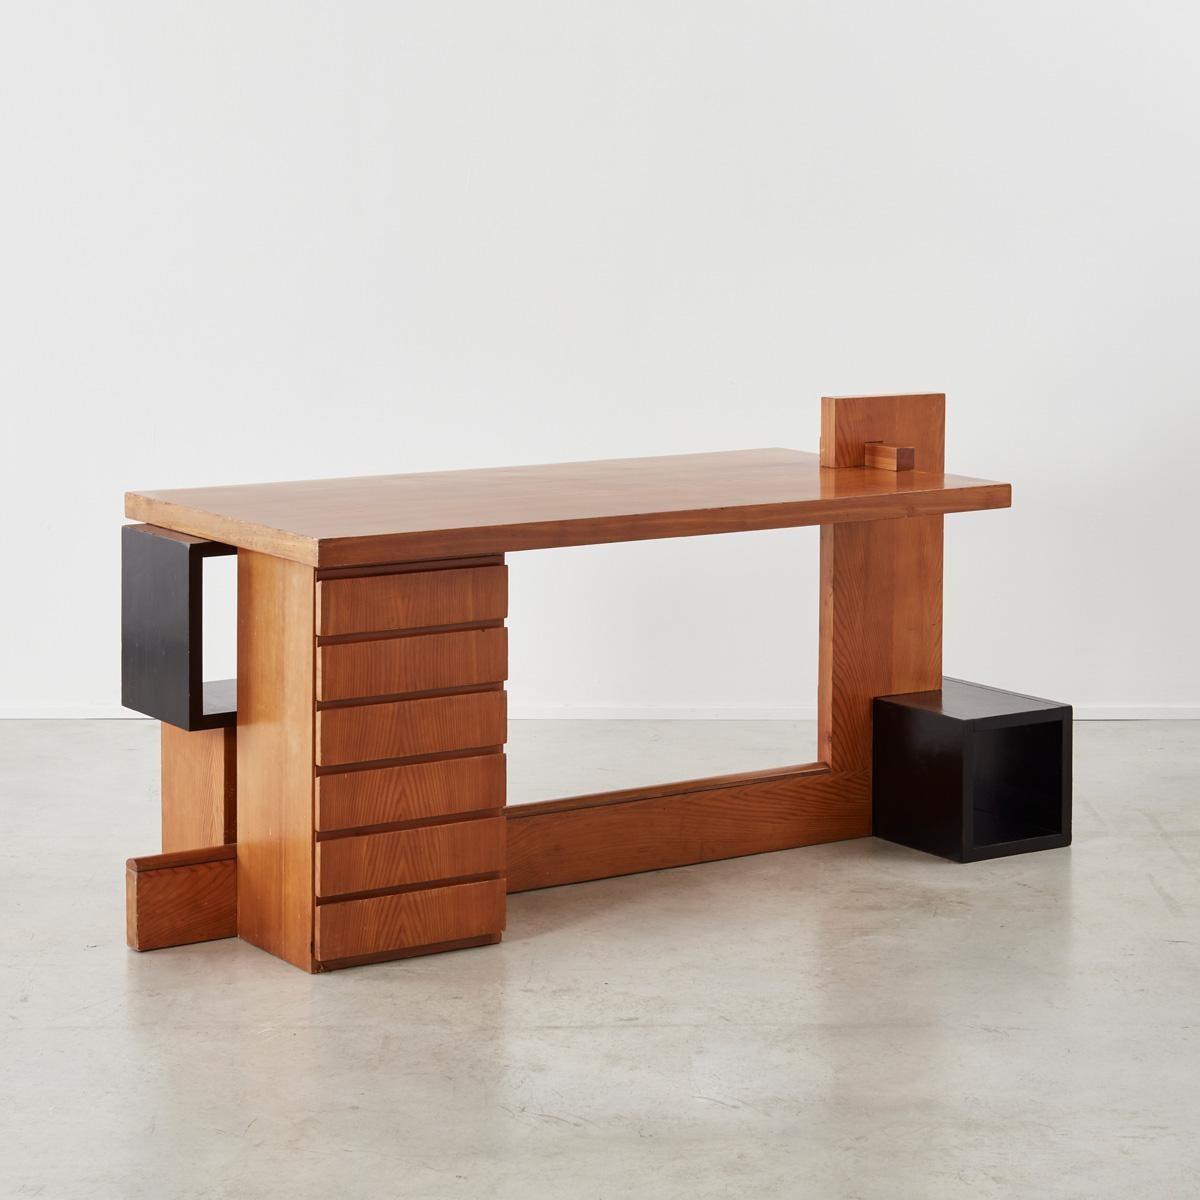 De Stijl Unique Constructivist style desk by Daniele Baroni, Italy, c1960